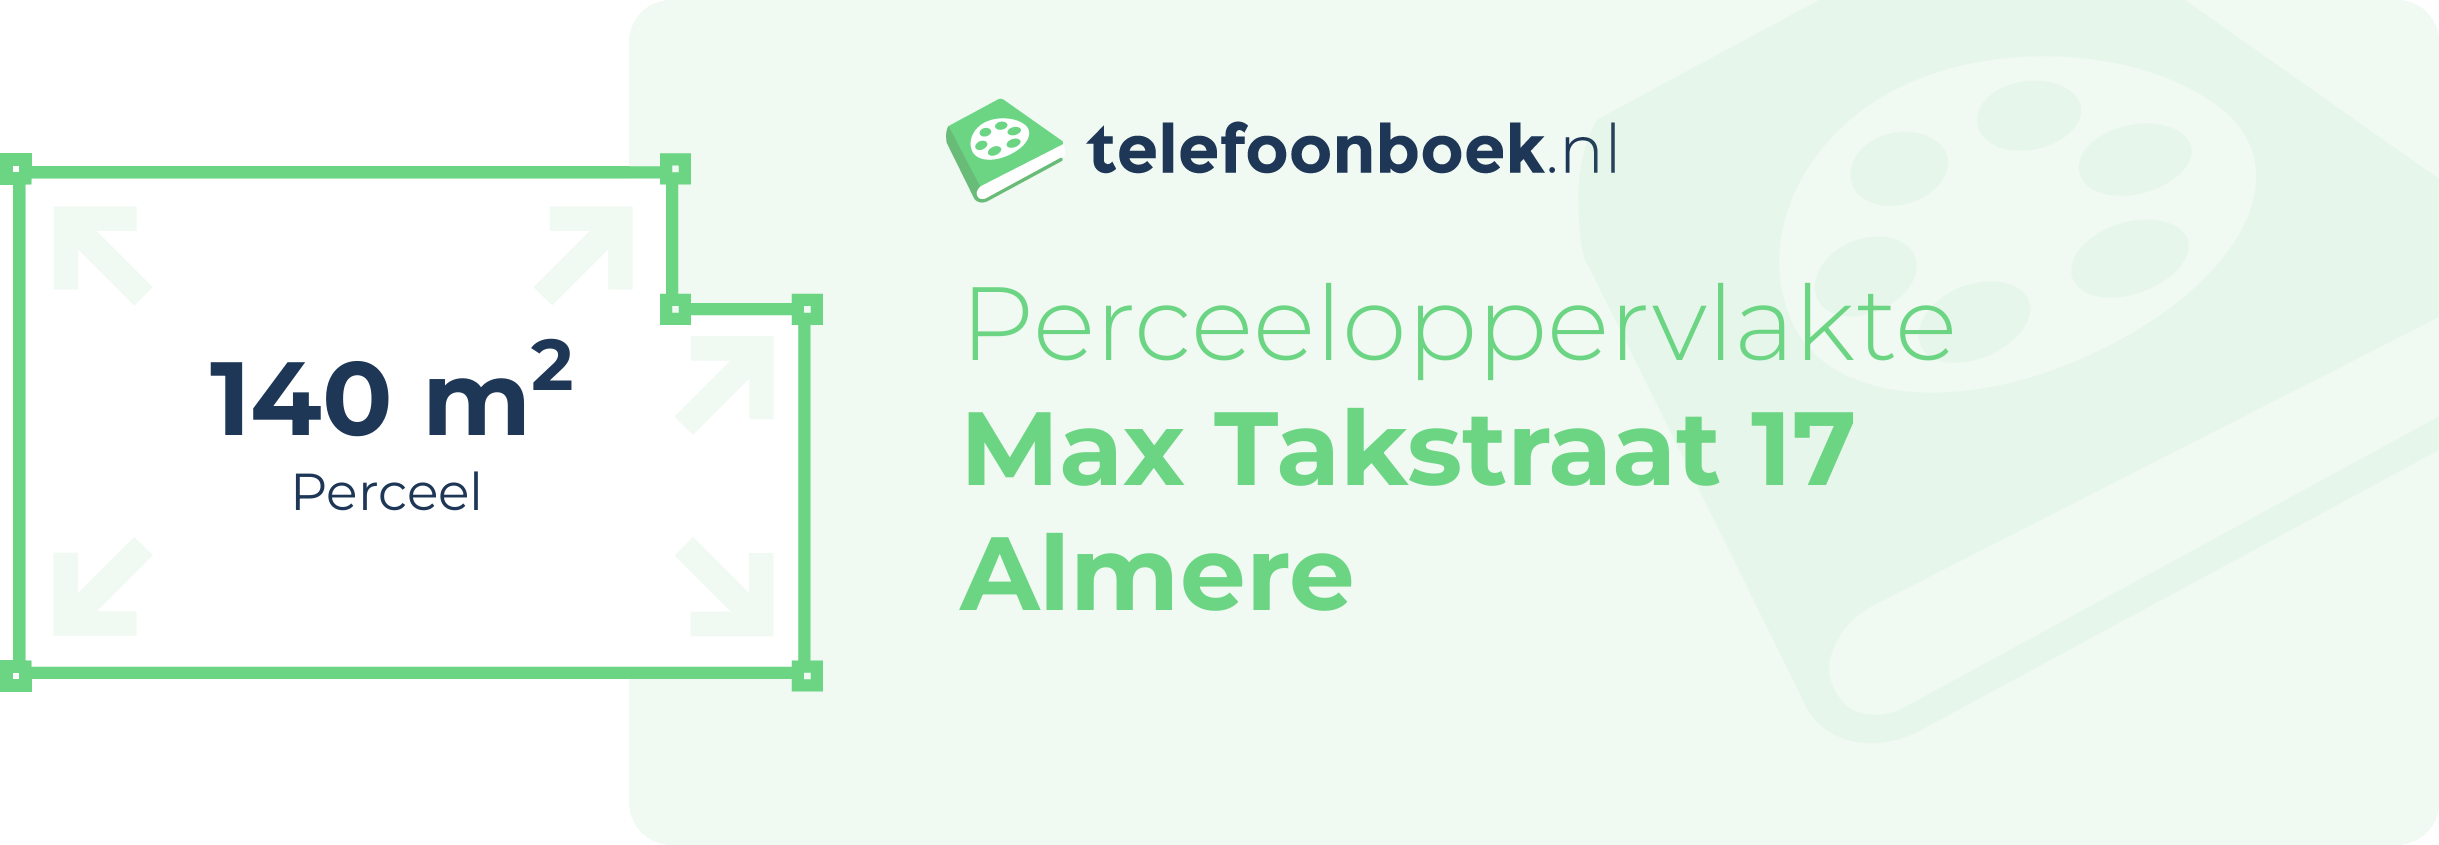 Perceeloppervlakte Max Takstraat 17 Almere